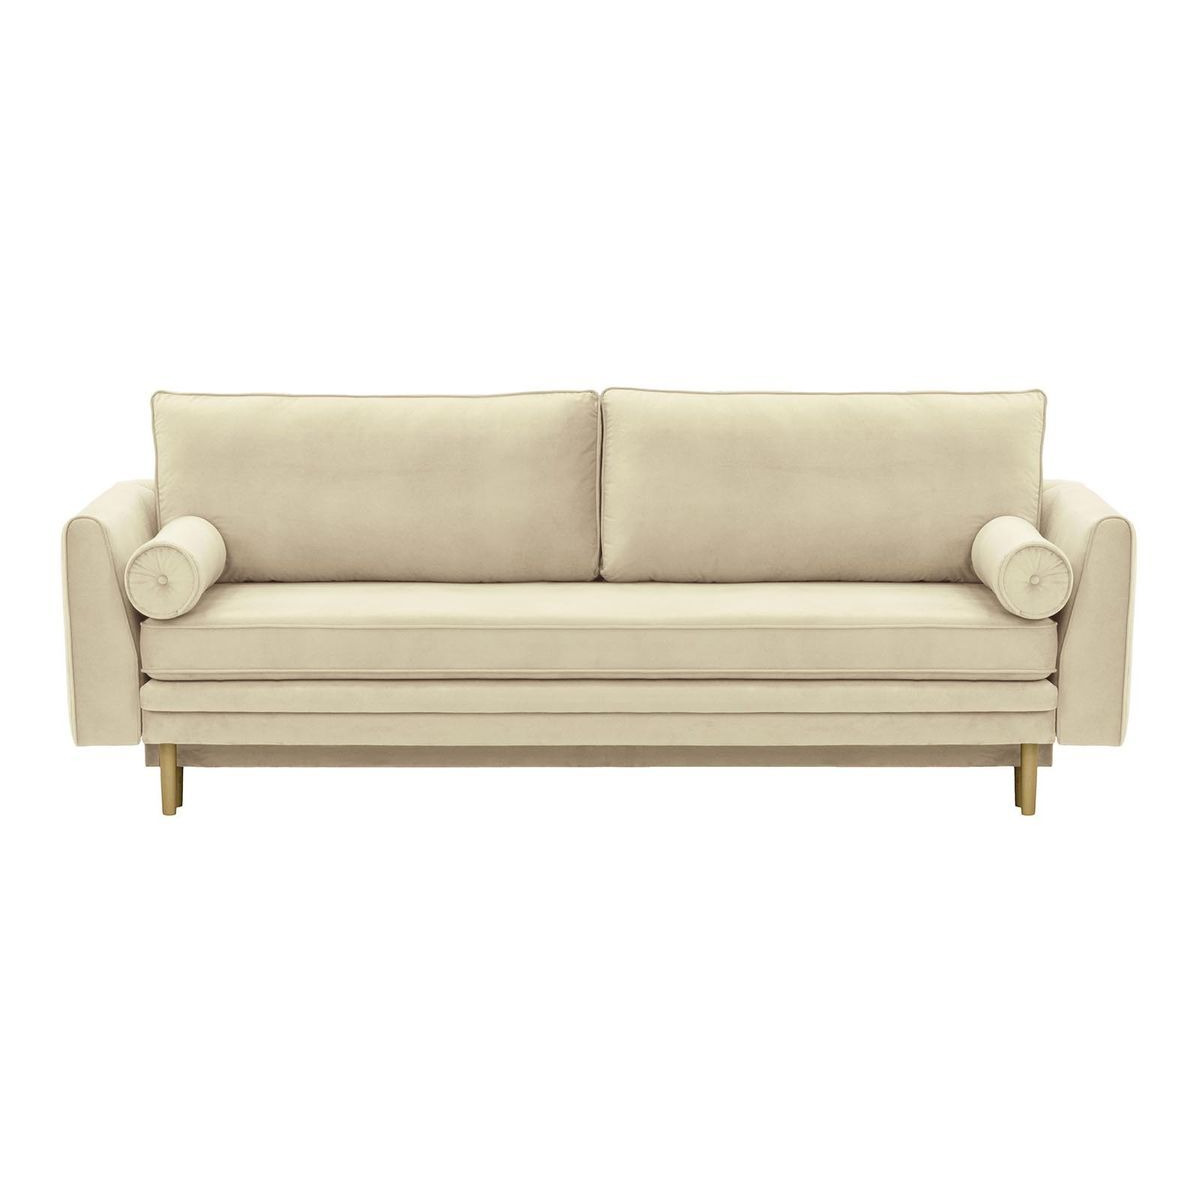 Boris Sofa Bed with Storage, light beige, Leg colour: wax black - image 1